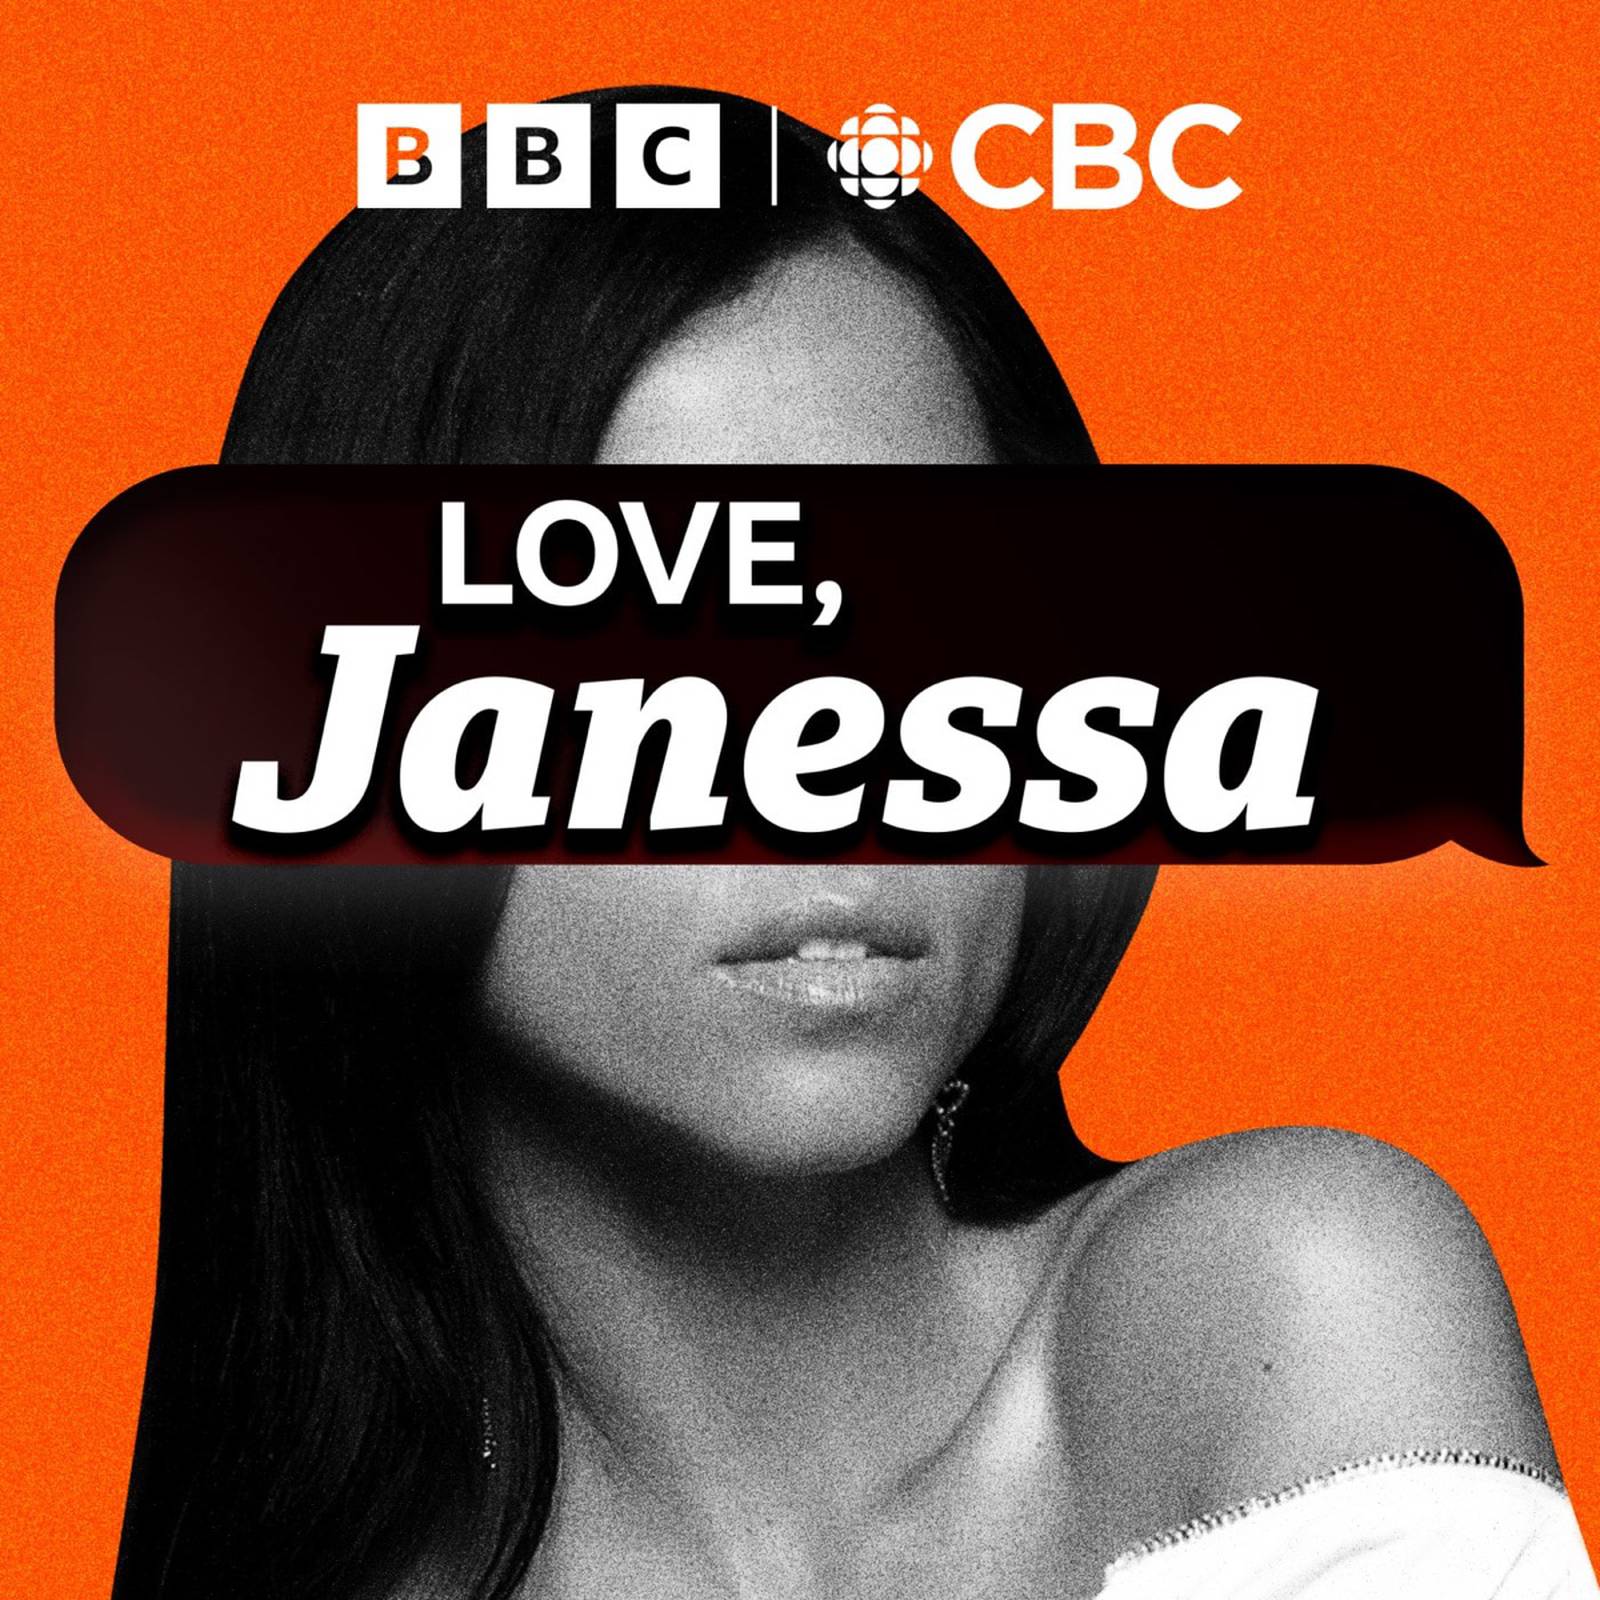 Love, Janessa podcast